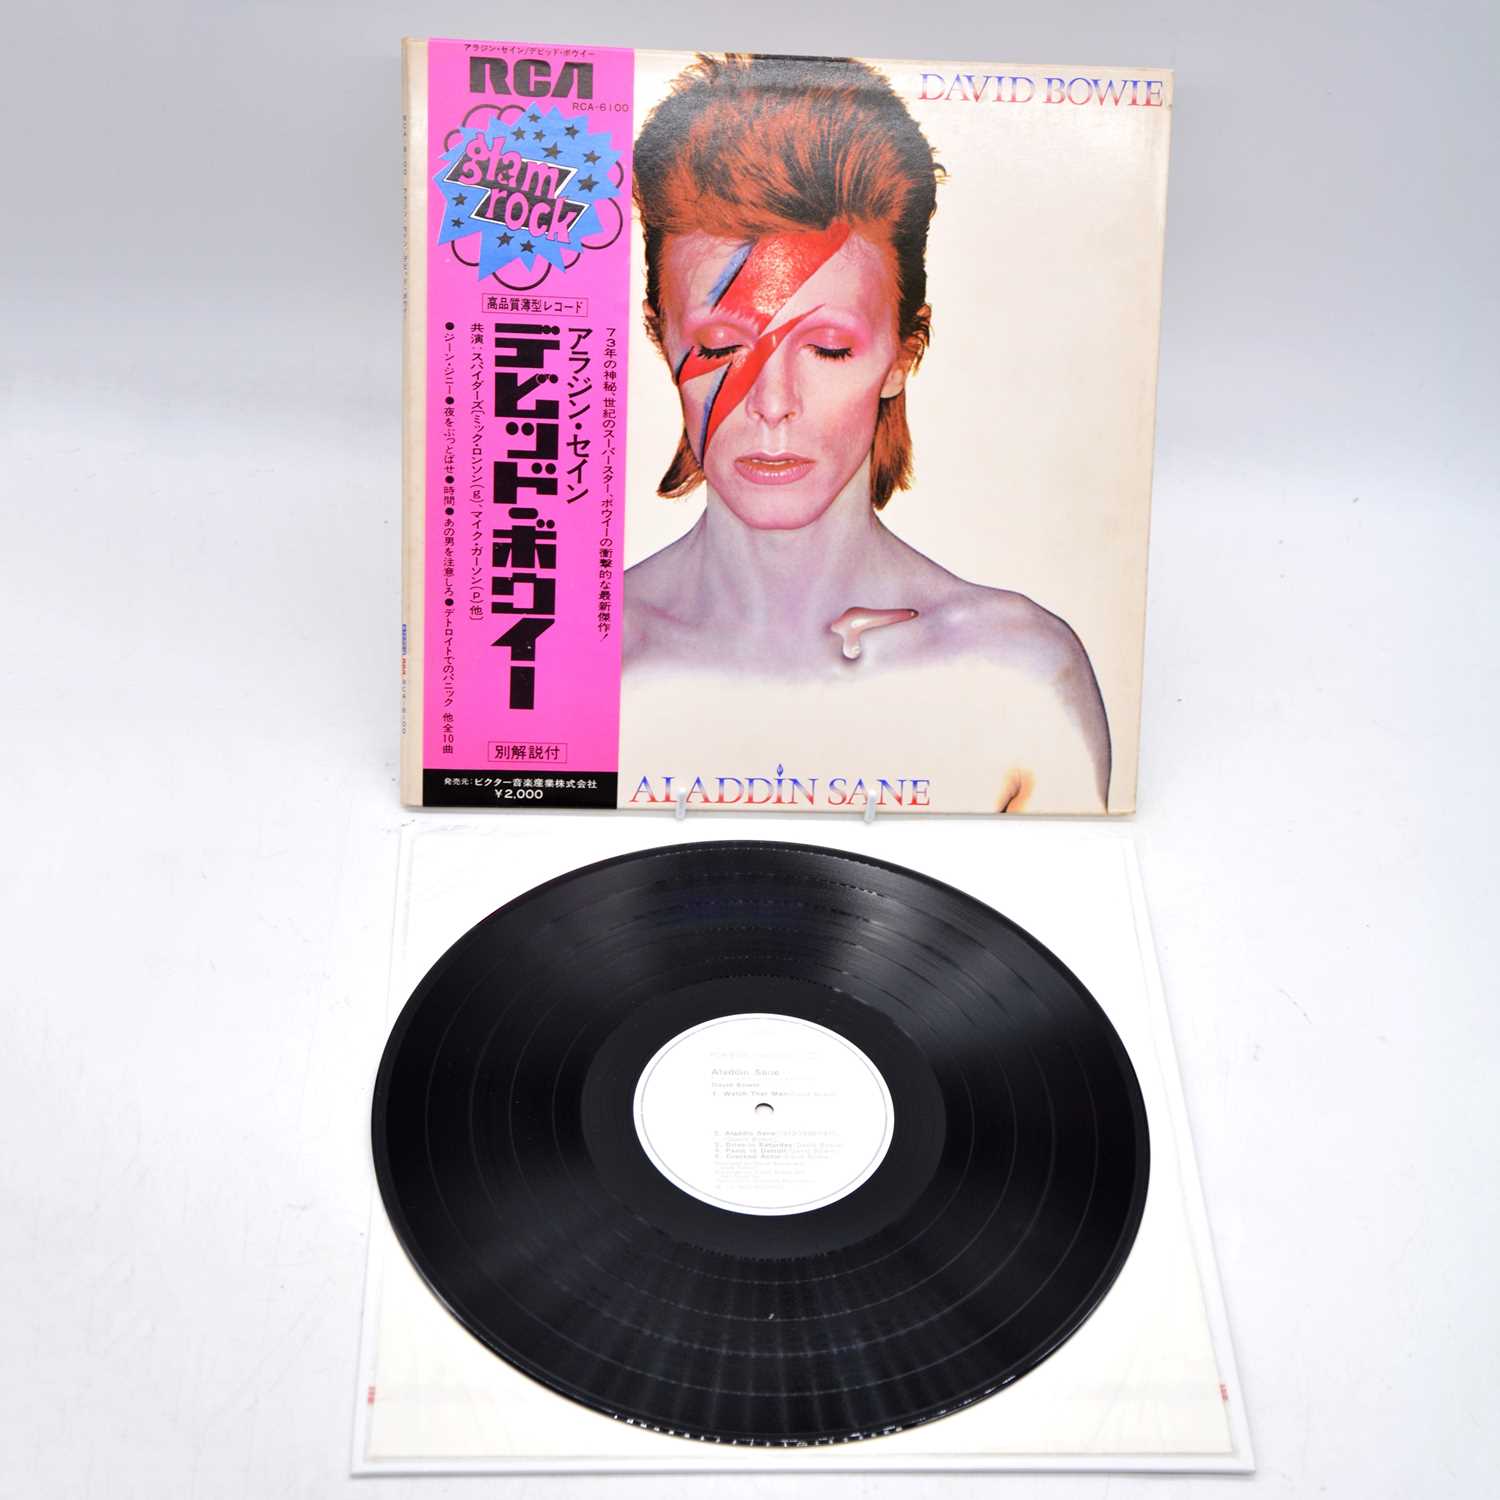 Lot 57 - David Bowie LP vinyl record, Aladdin Sane, RCA-6100 Japanese pressing